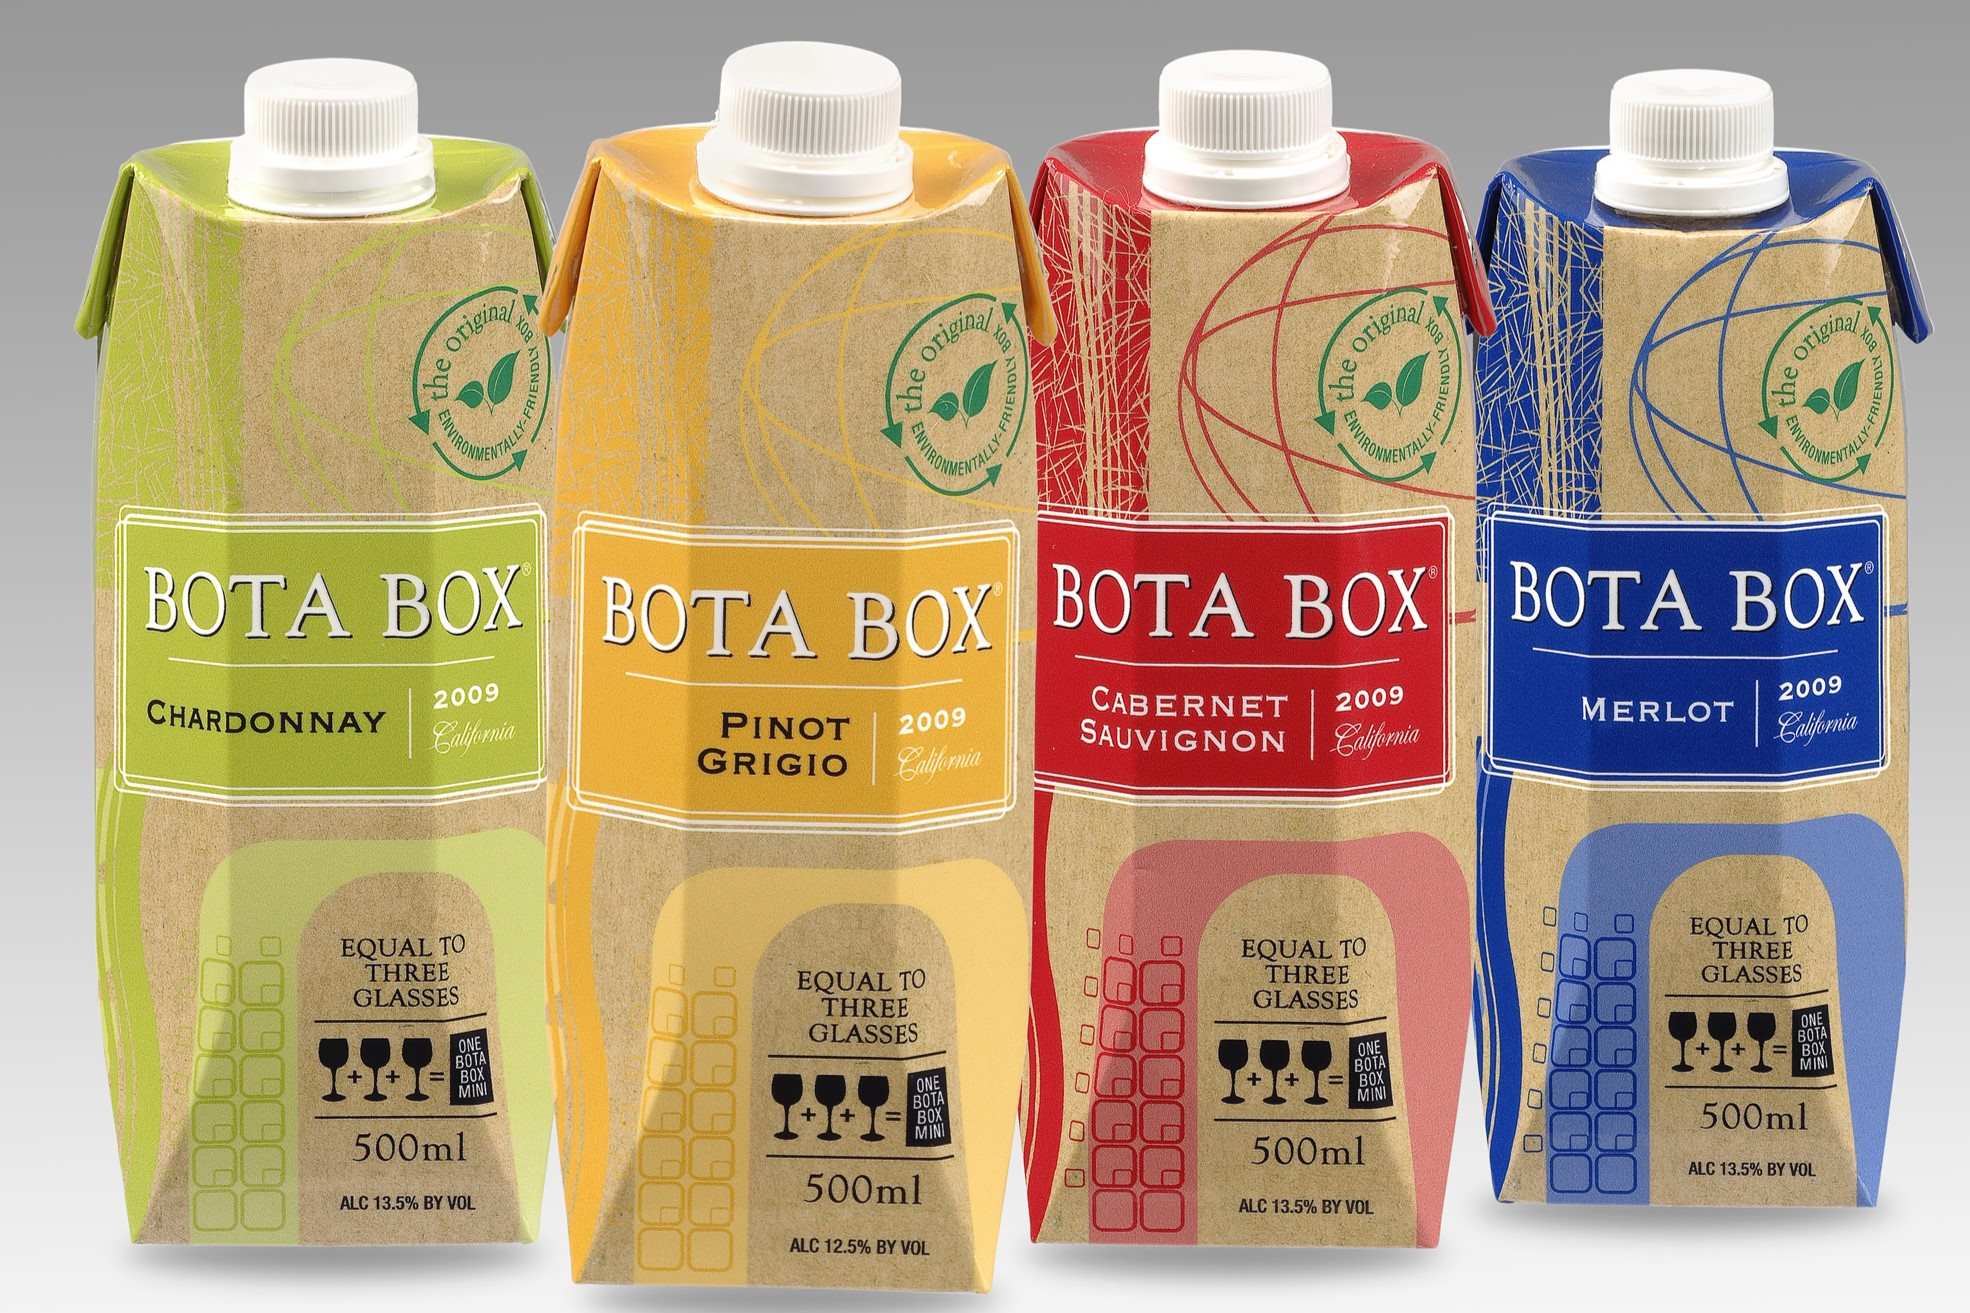 19-bota-box-nutrition-facts